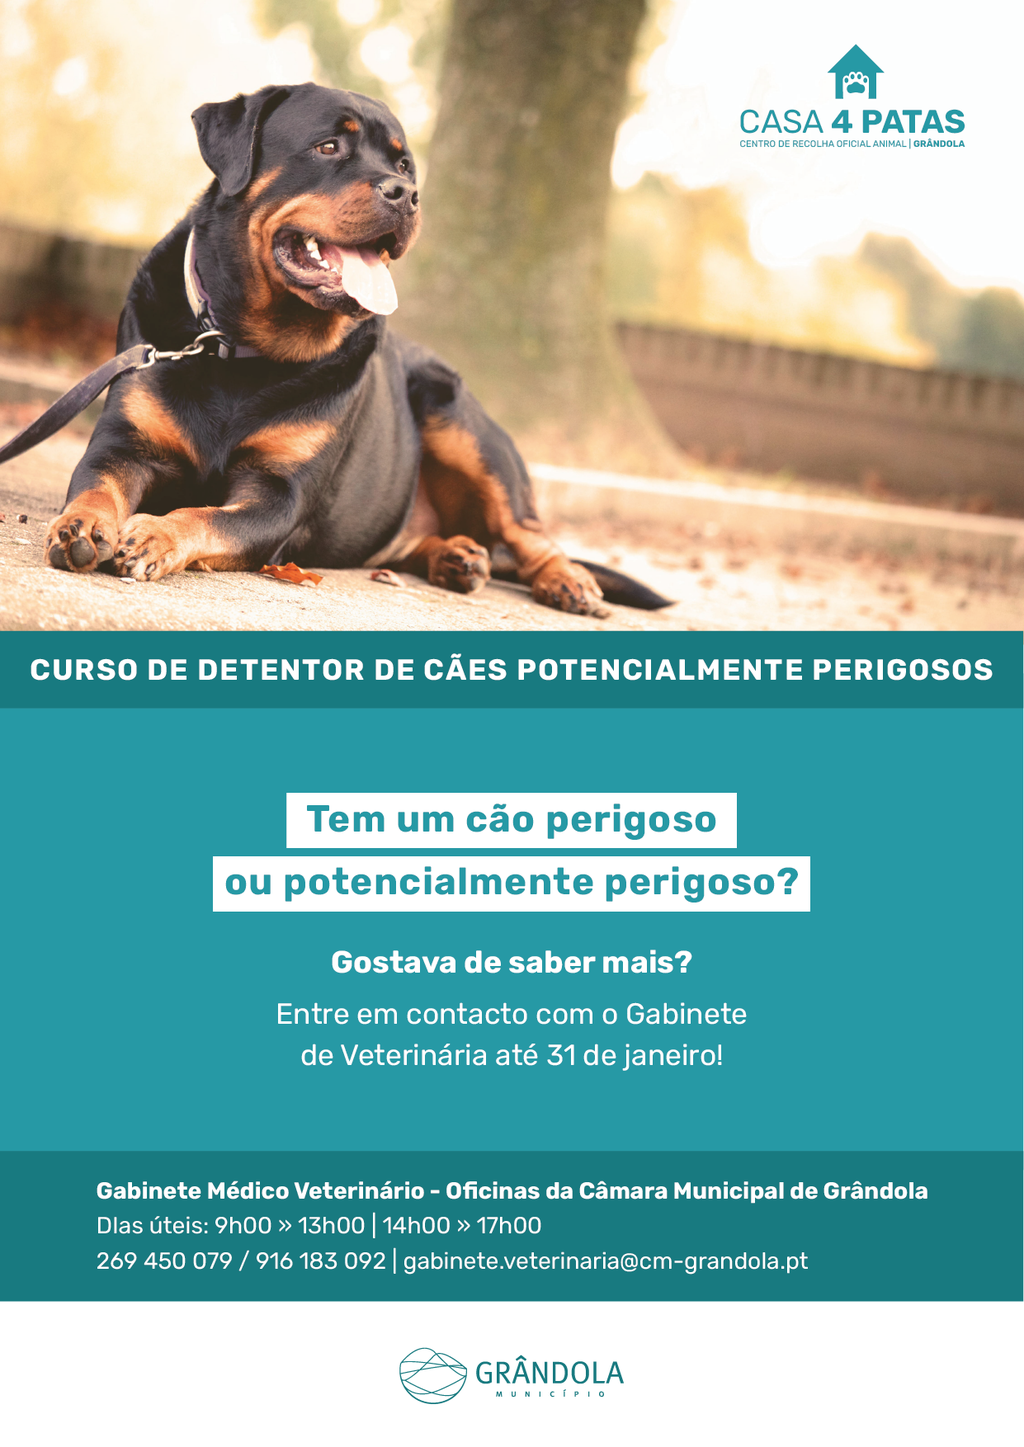 GABINETE VETERINÁRIO | Curso de detentor de cães potencialmente perigosos